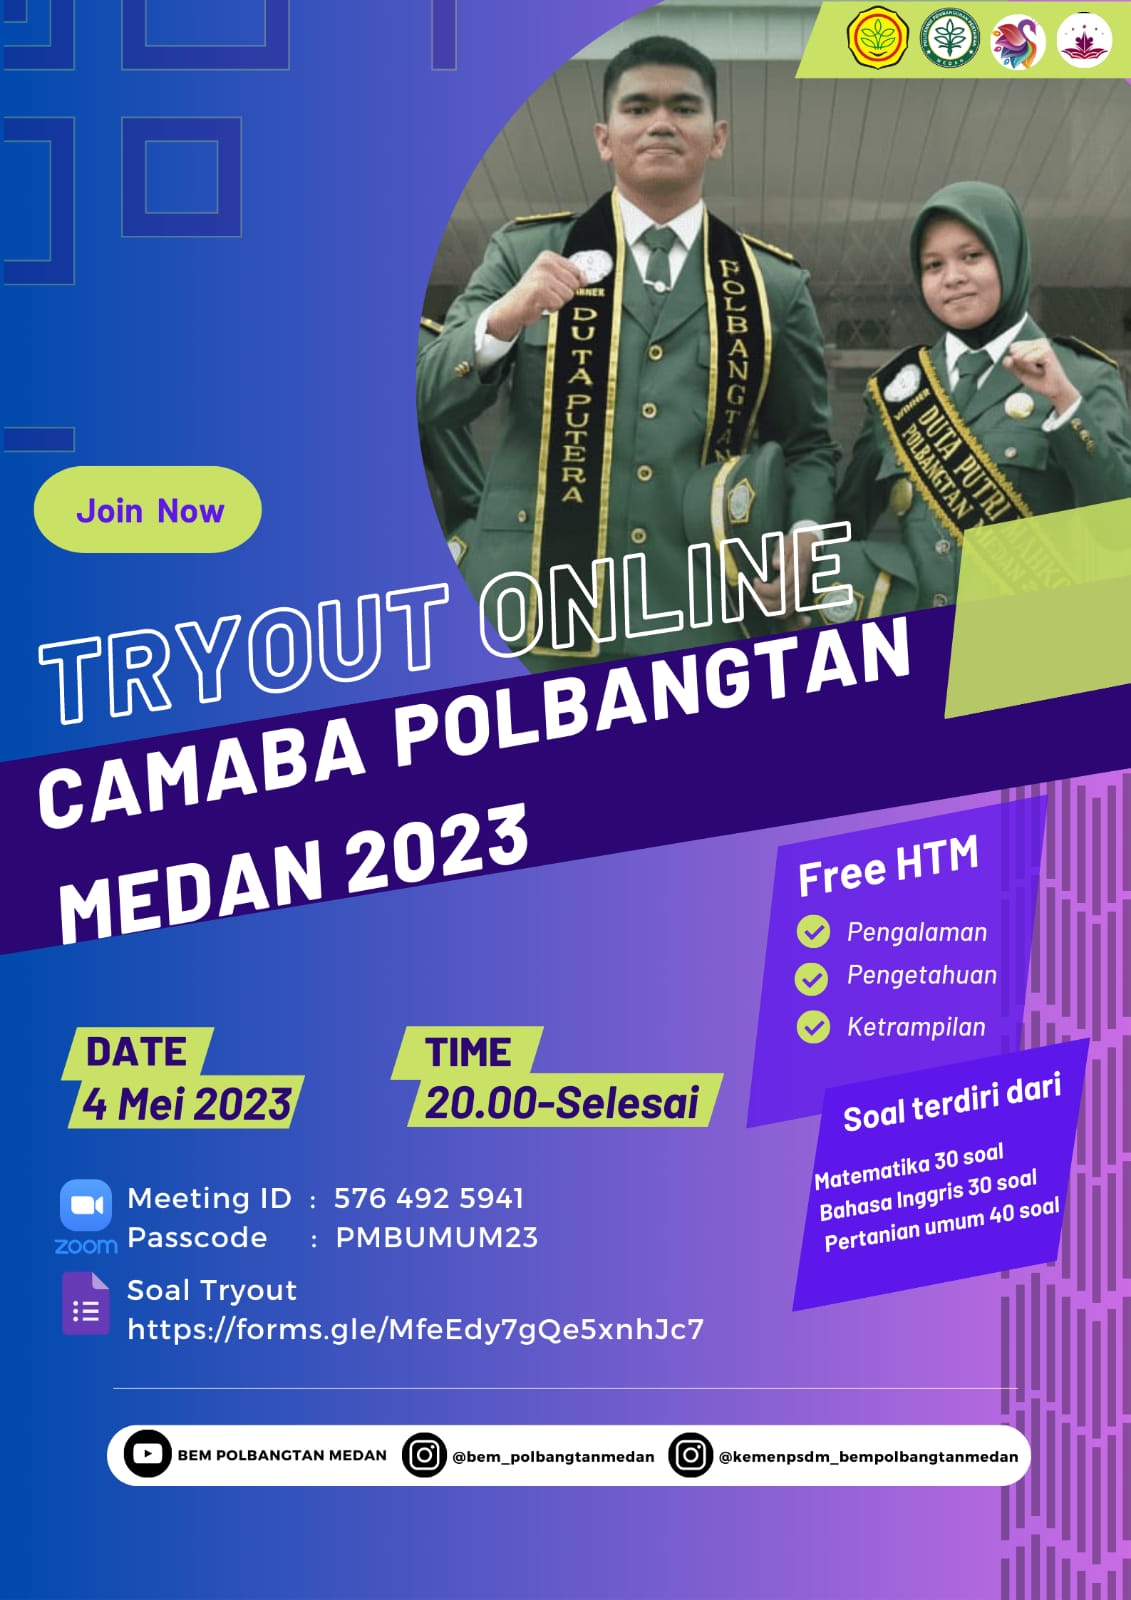 Try Out Camaba Polbangtan Medan 2023